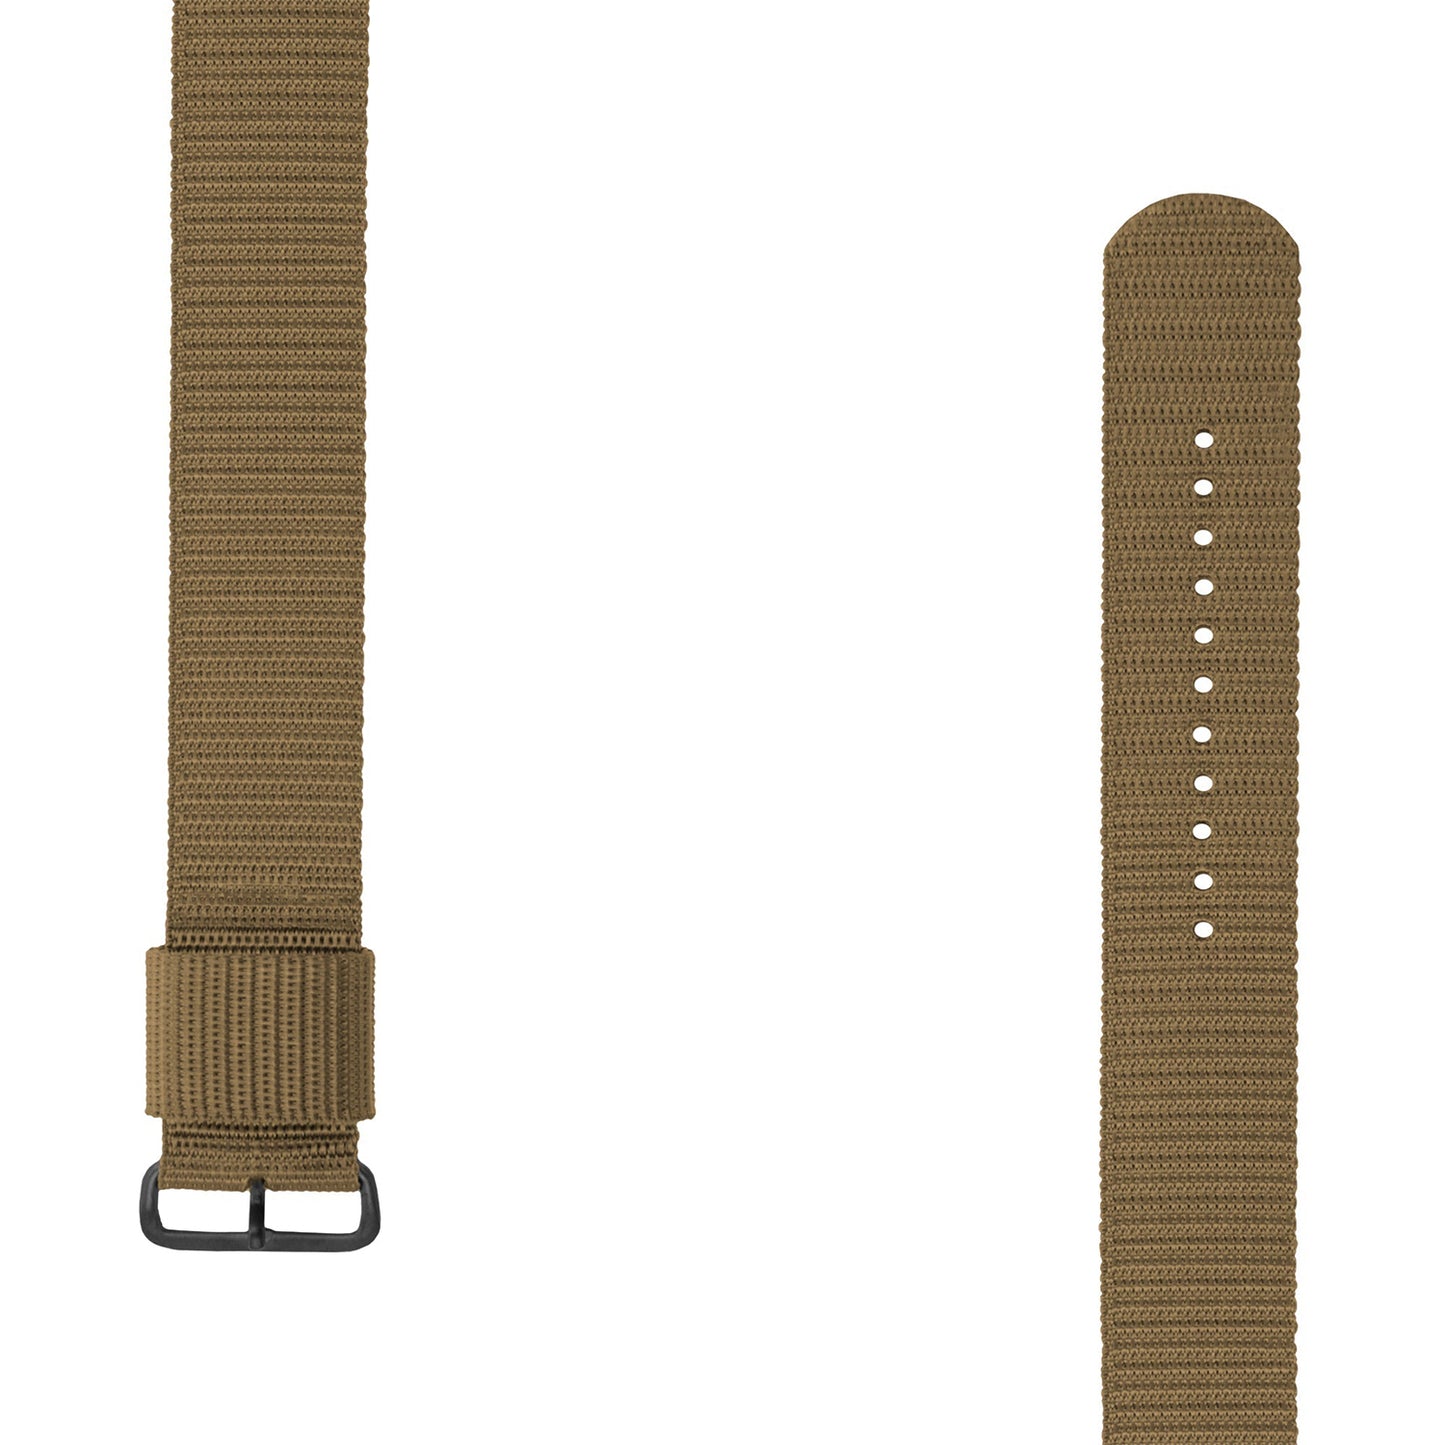 MARATHON 22mm Ballistic Nylon Watch Band/Strap with Stainless Steel Buckle